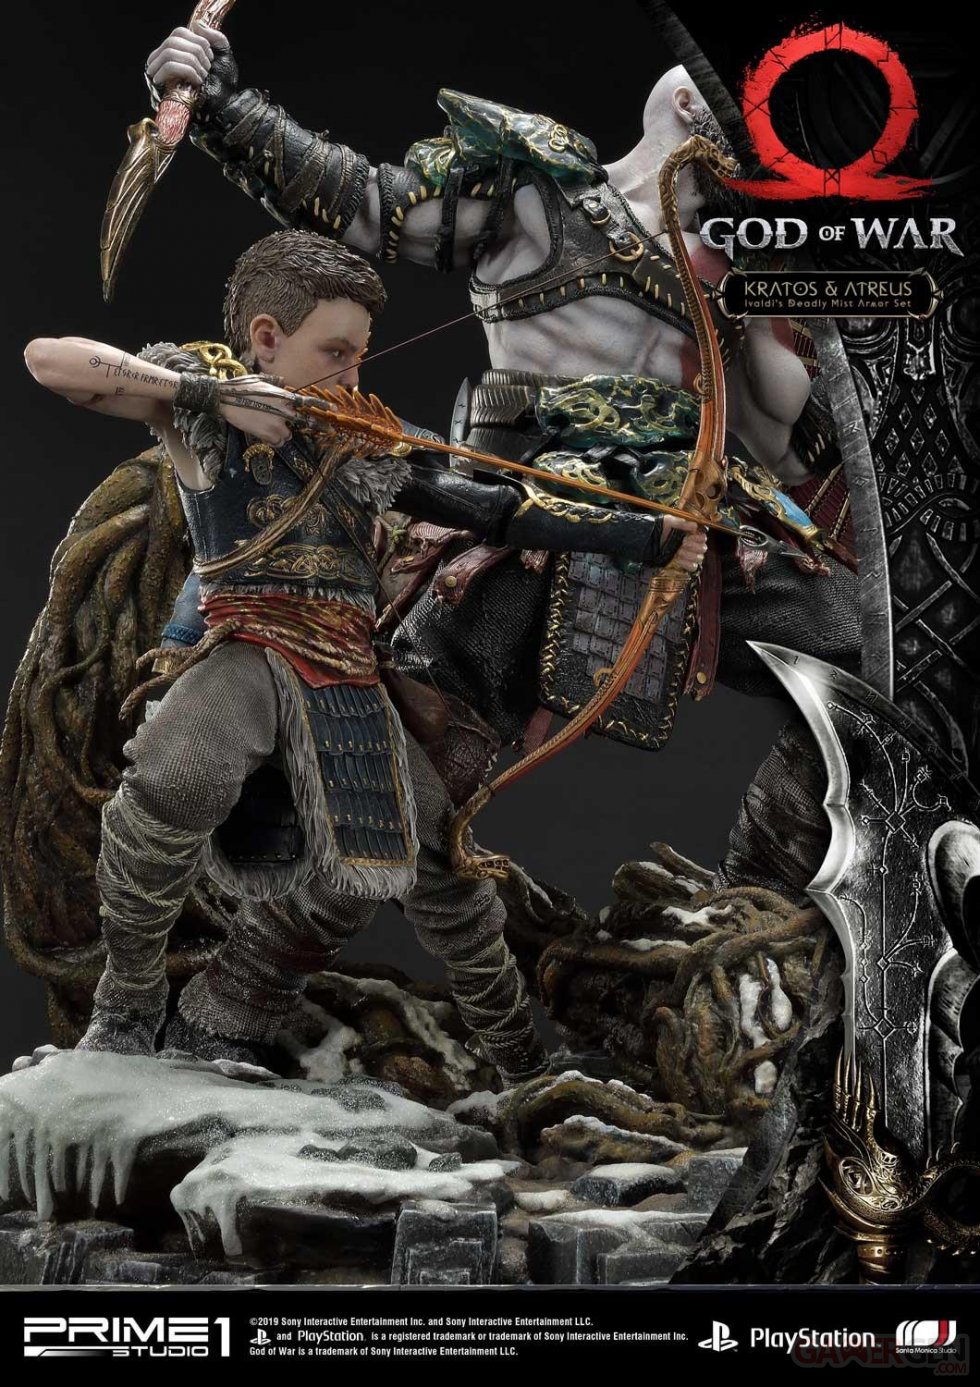 God-of-War-figurine-statuette-Prime-1-Studio-Kratos-Atreus-17-17-11-2019